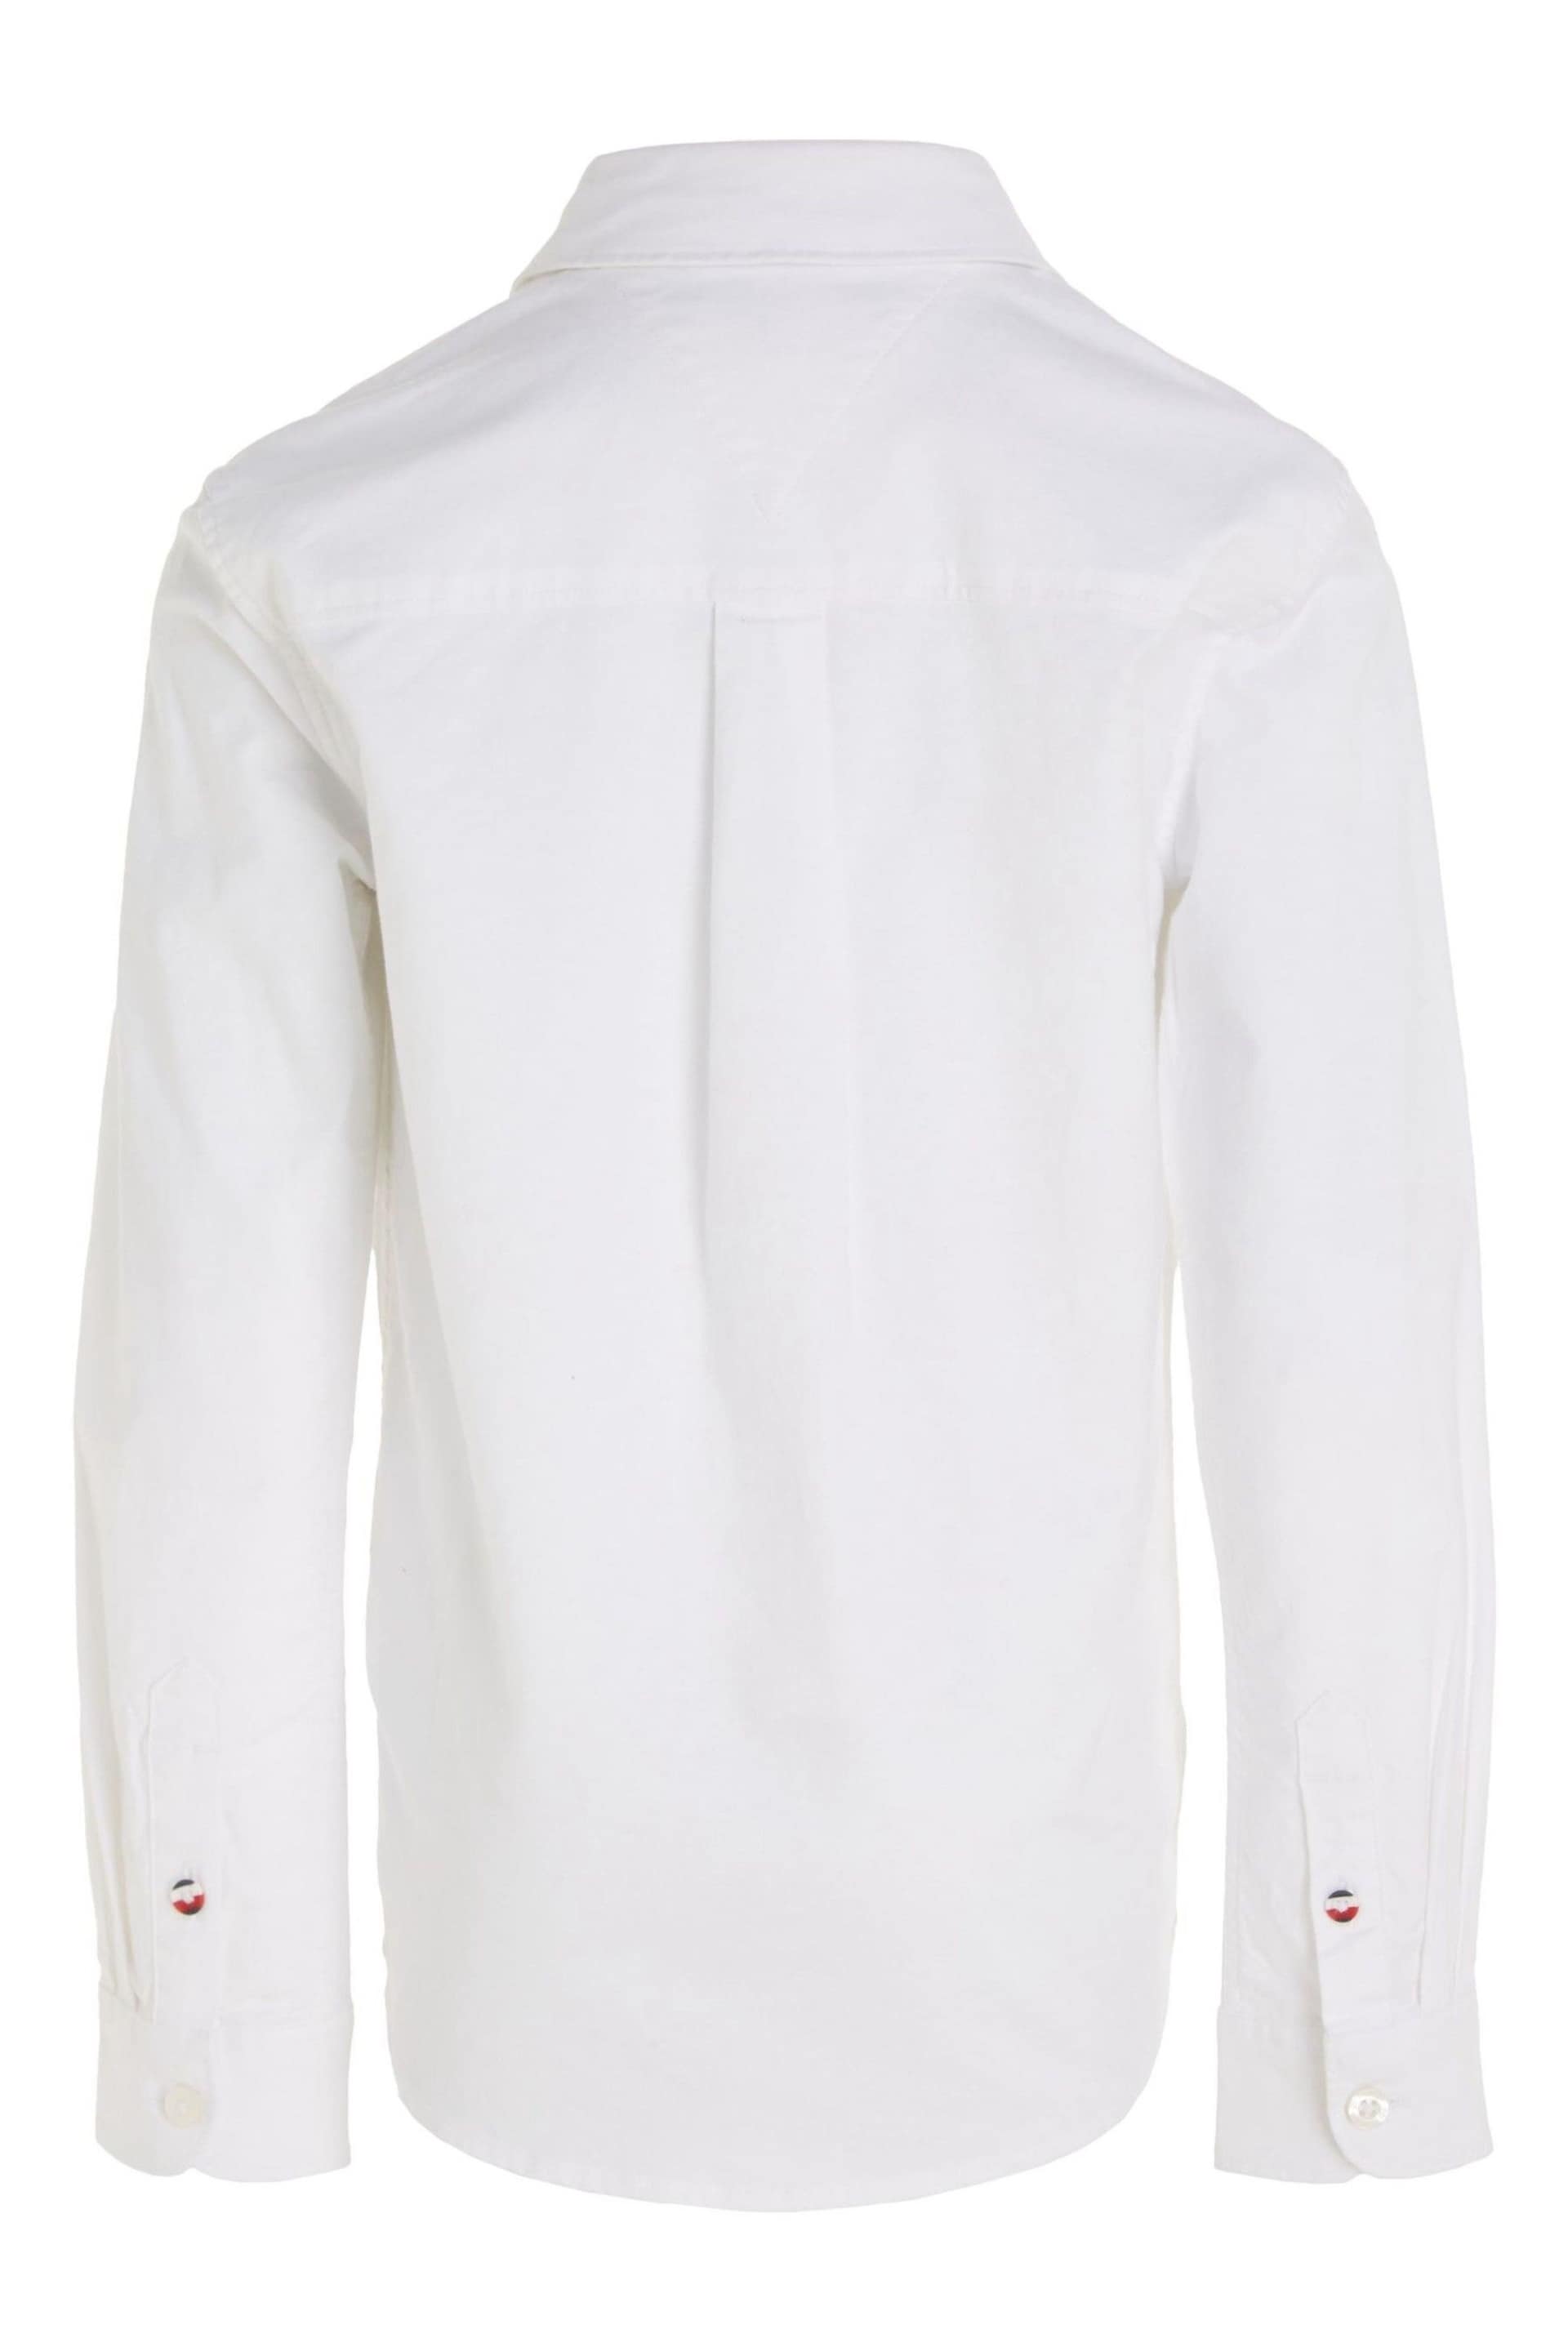 Tommy Hilfiger White Flag Oxford Shirt - Image 5 of 6